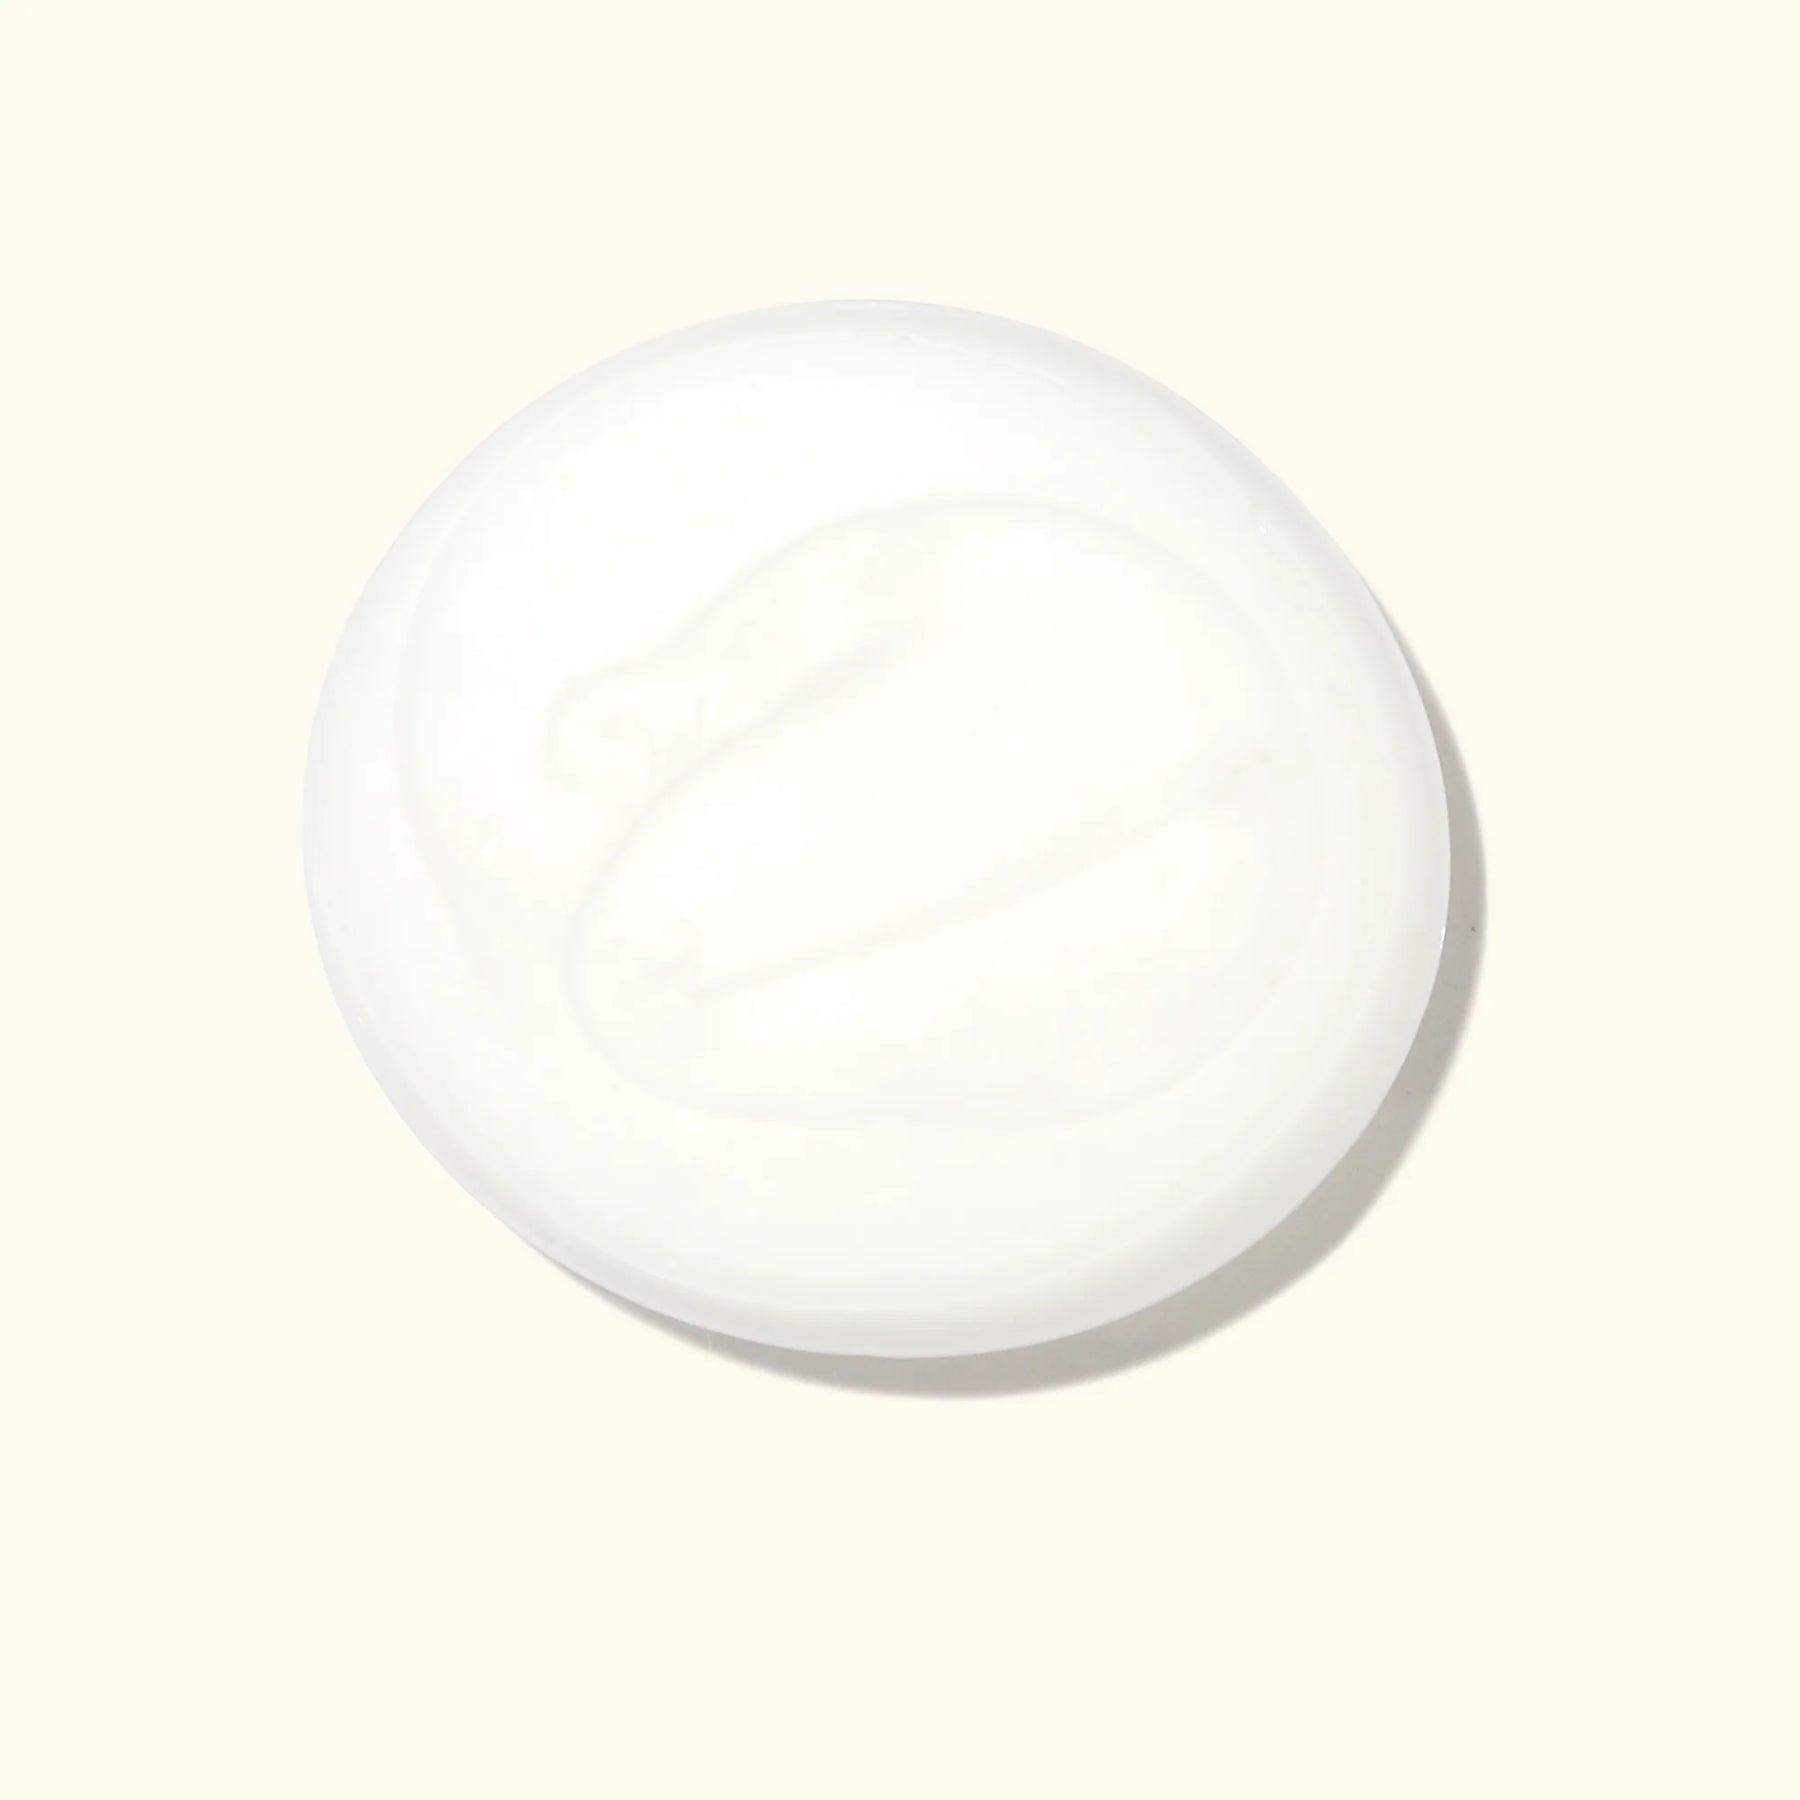 Amika Mirrorball High Shine + Protect Antioxidant Shampoo